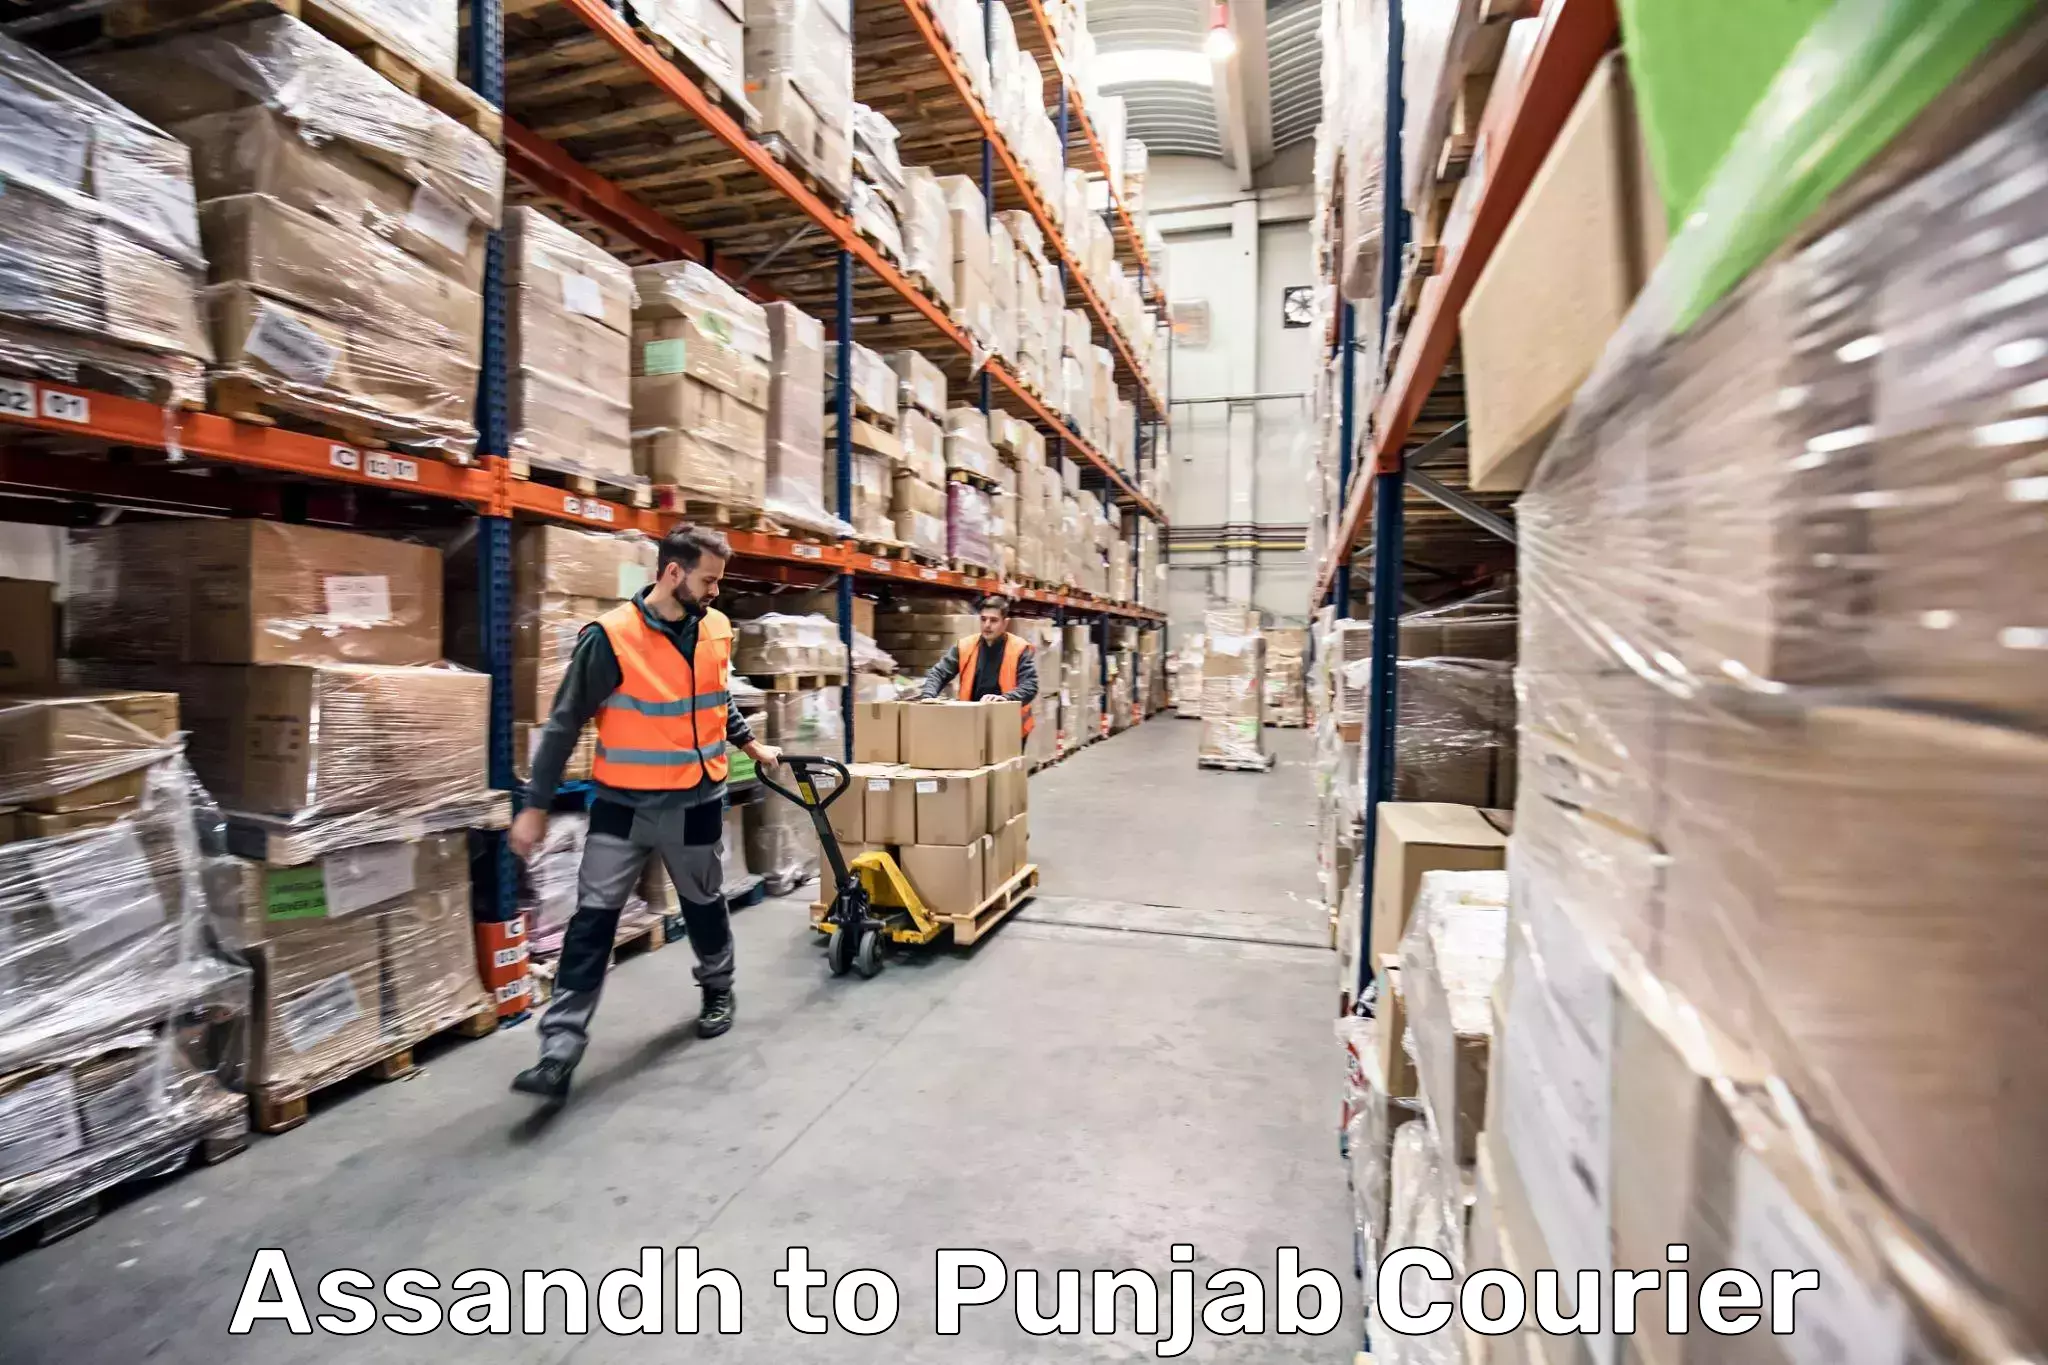 Luggage transport operations Assandh to Punjab